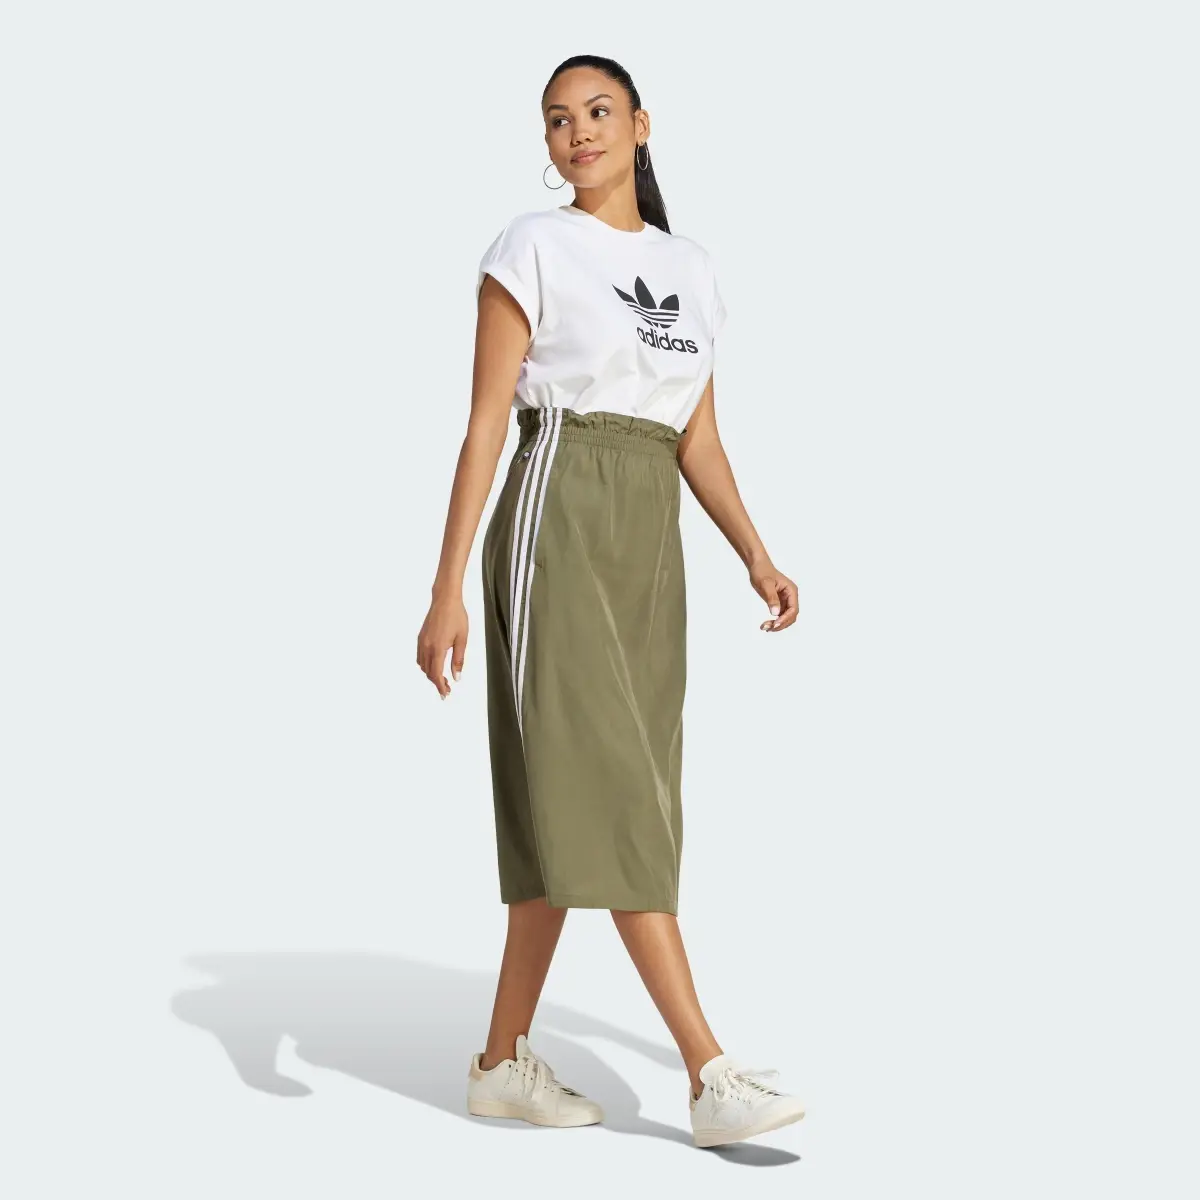 Adidas Parley Skirt. 3